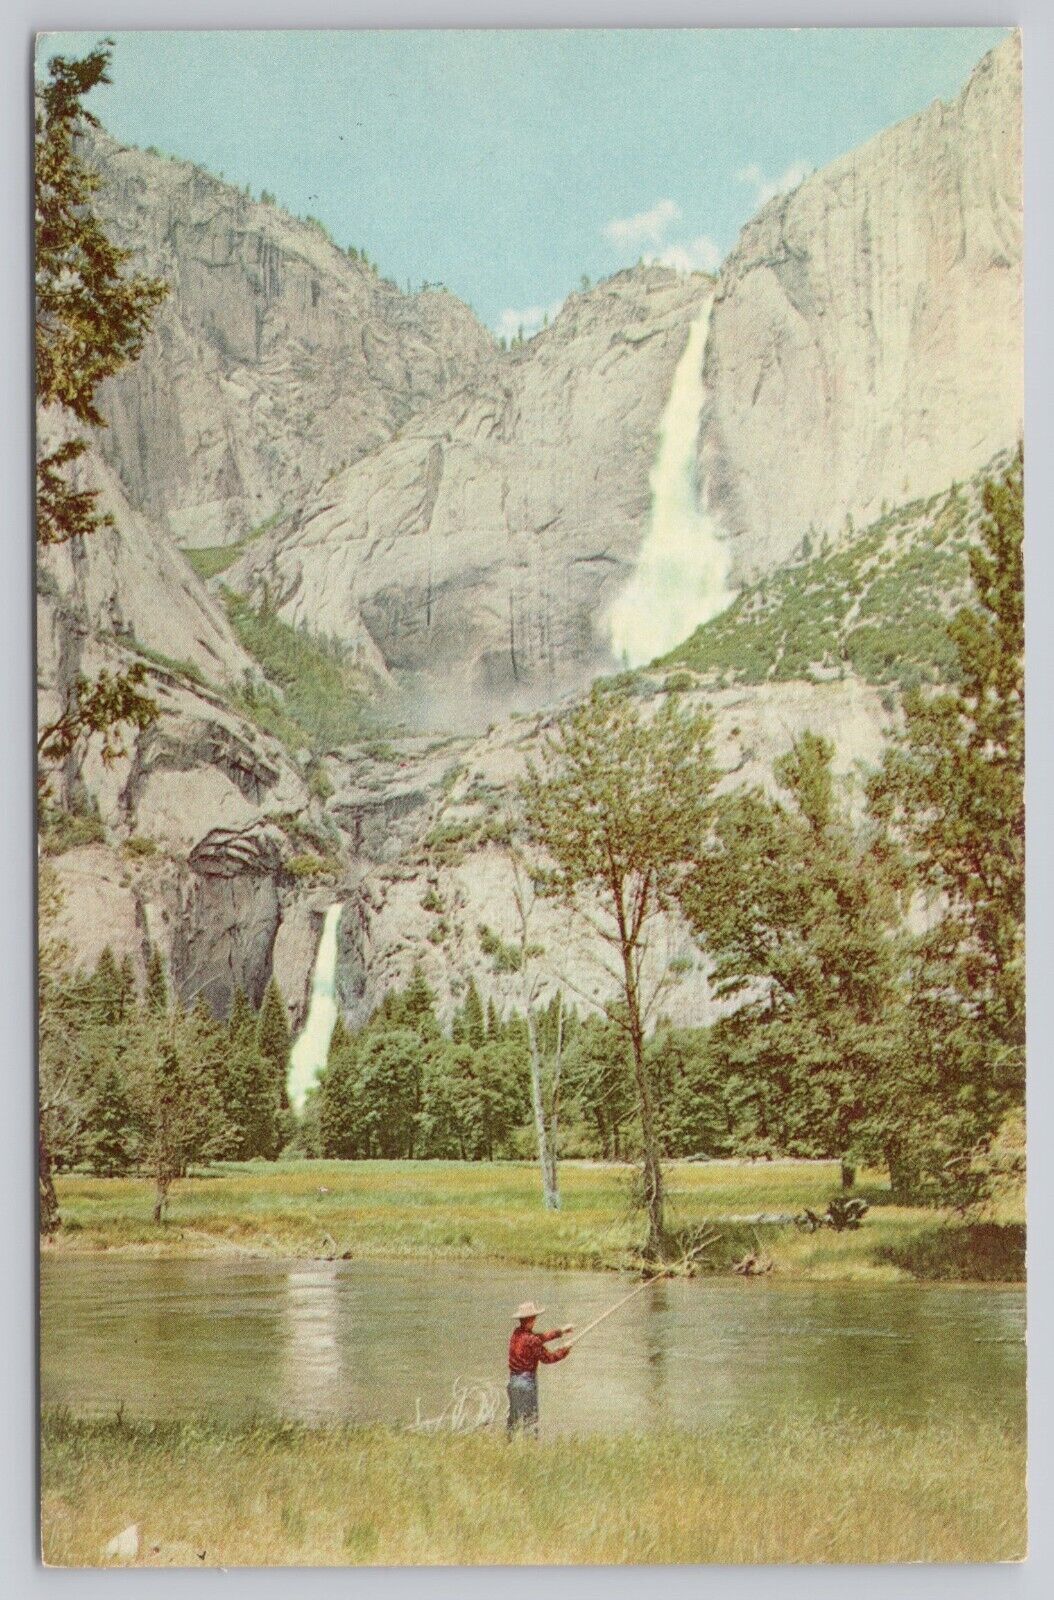 Yosemite National Park California, Yosemite Falls Fly Fishing, Vintage Postcard